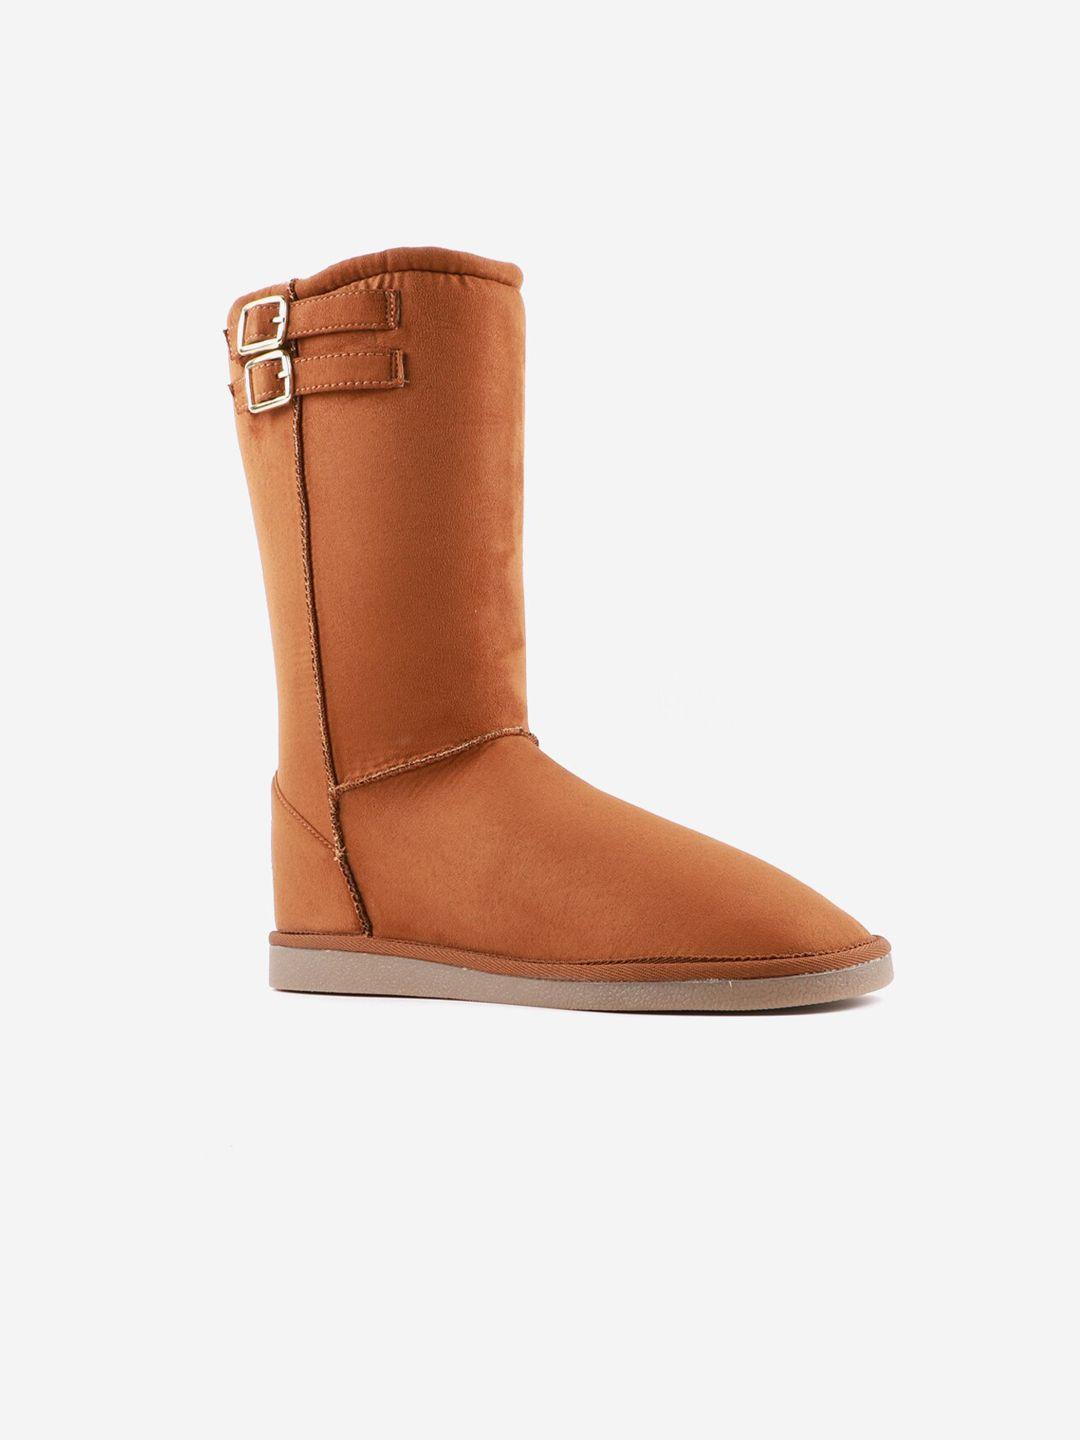 carlton-london-women-tan-brown-leather-flat-boots